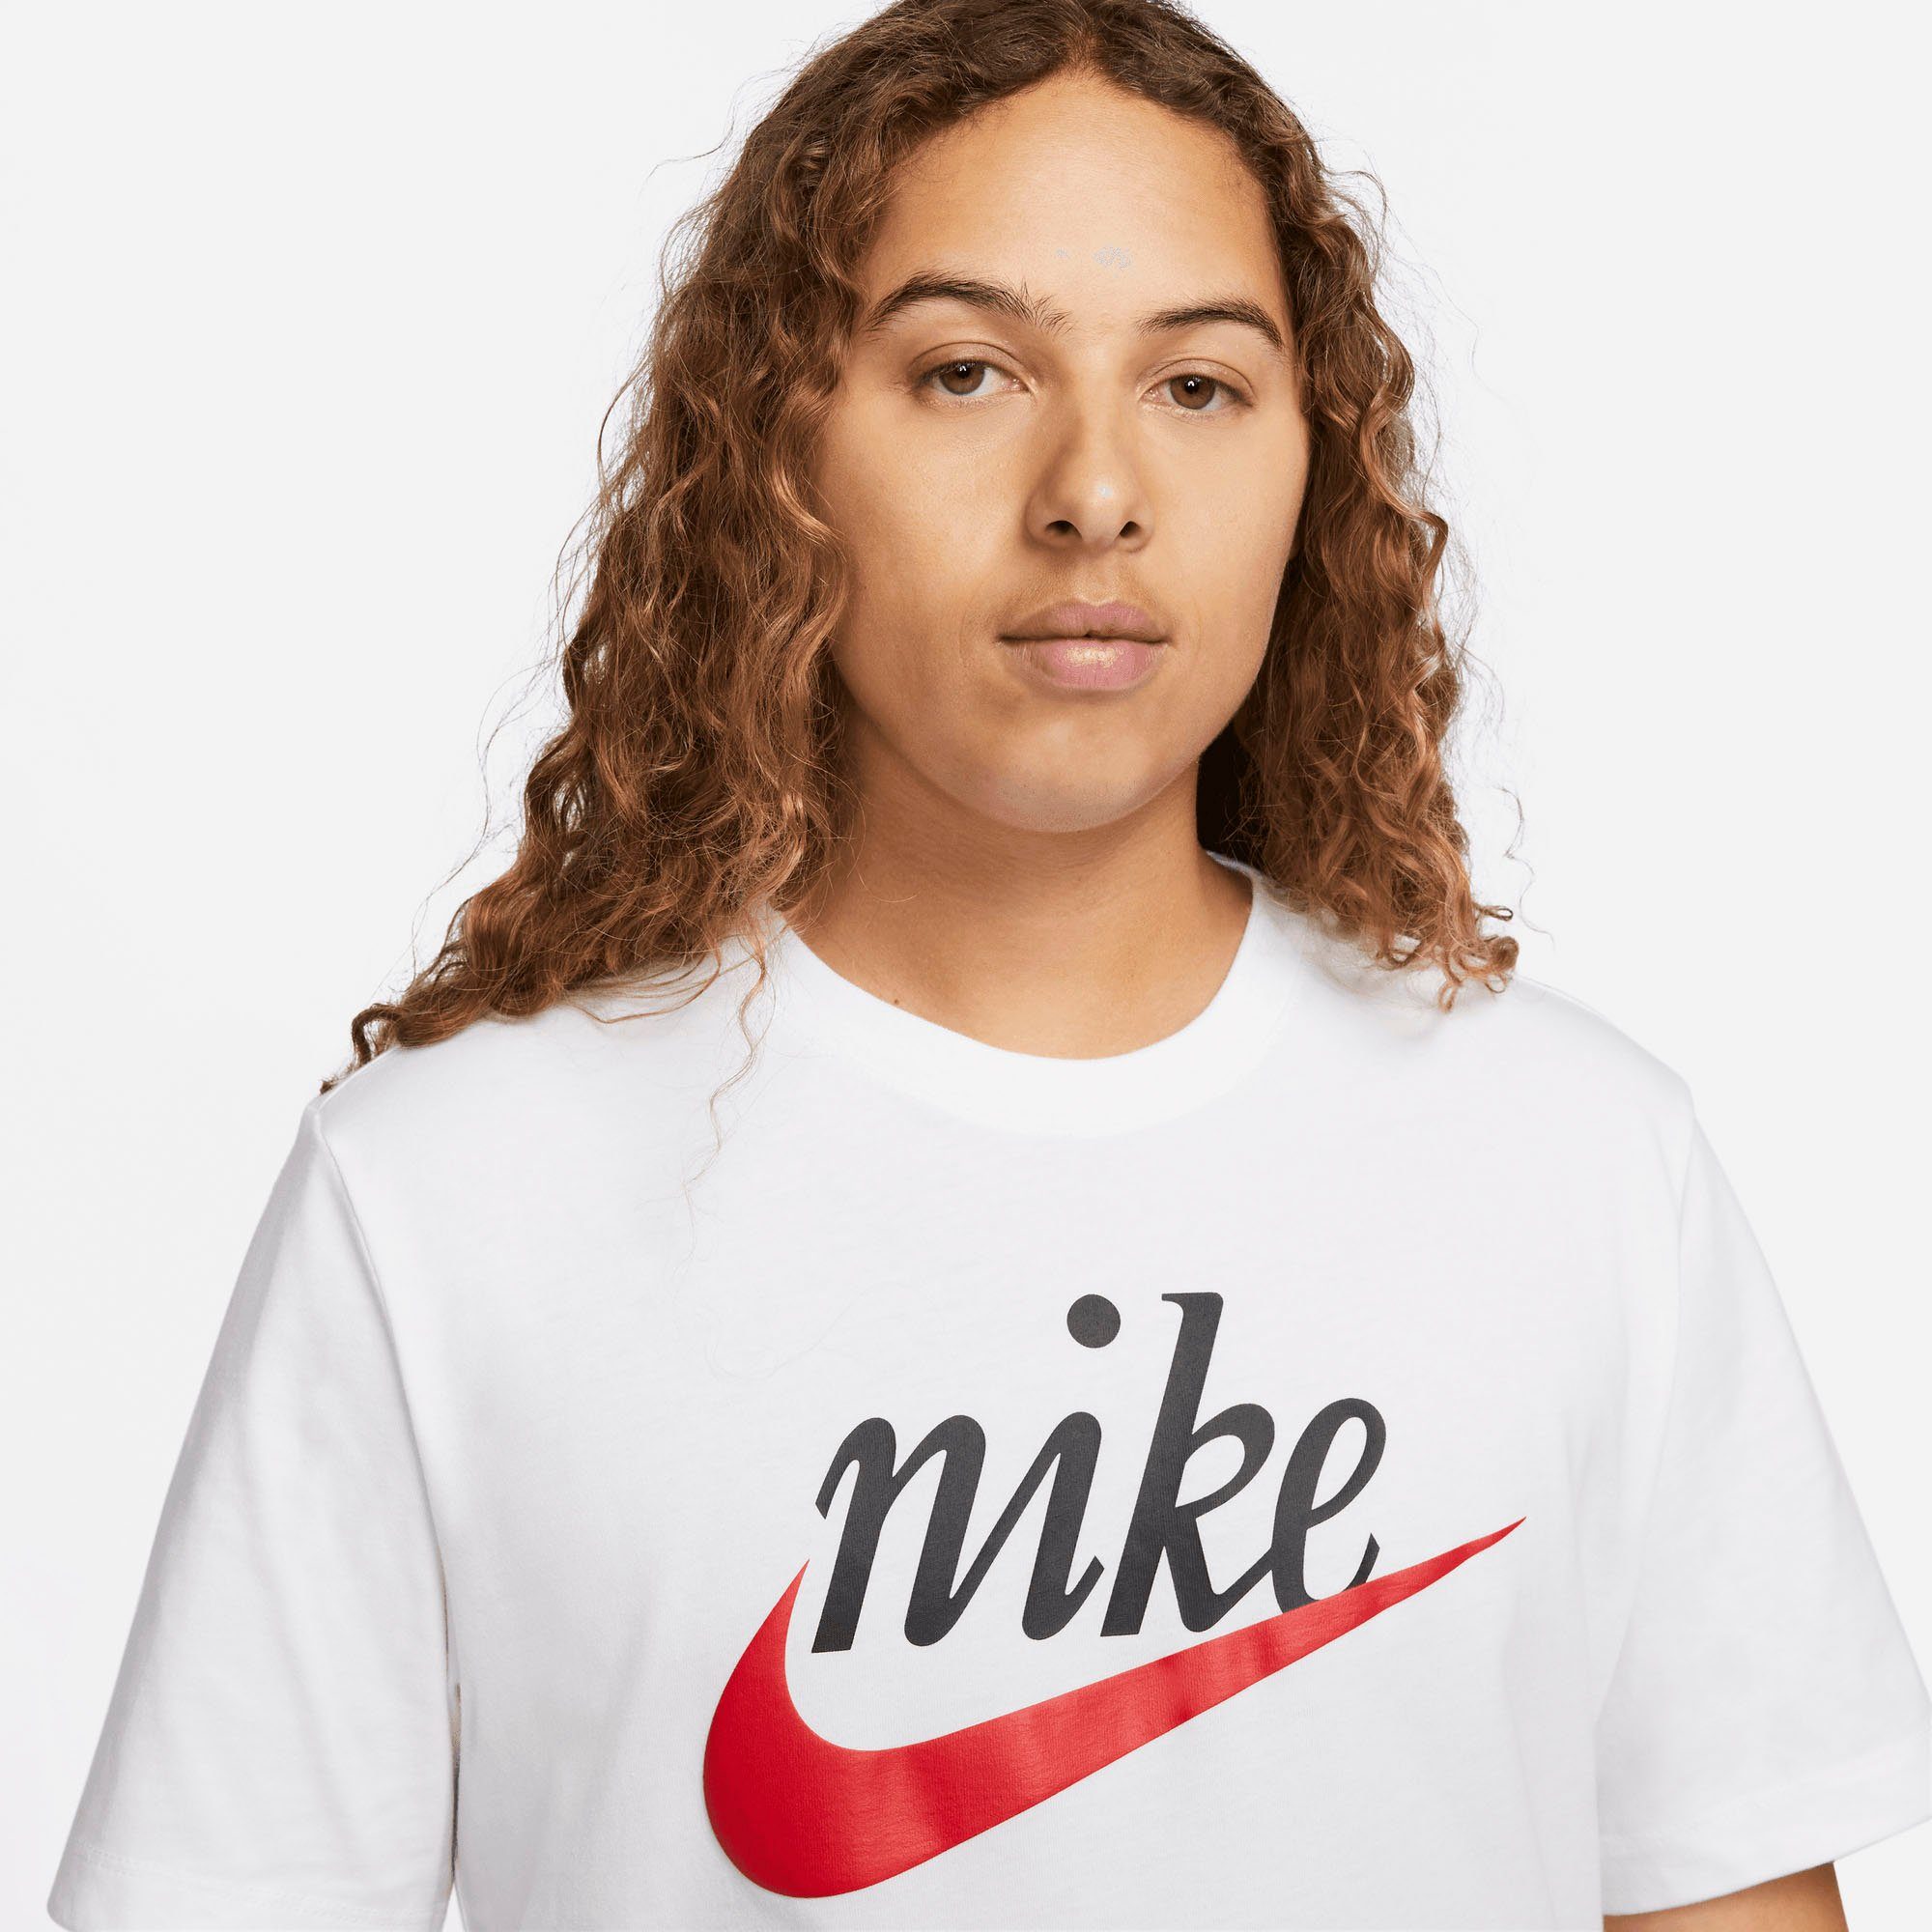 T-Shirt Nike Men's T-Shirt Sportswear WHITE